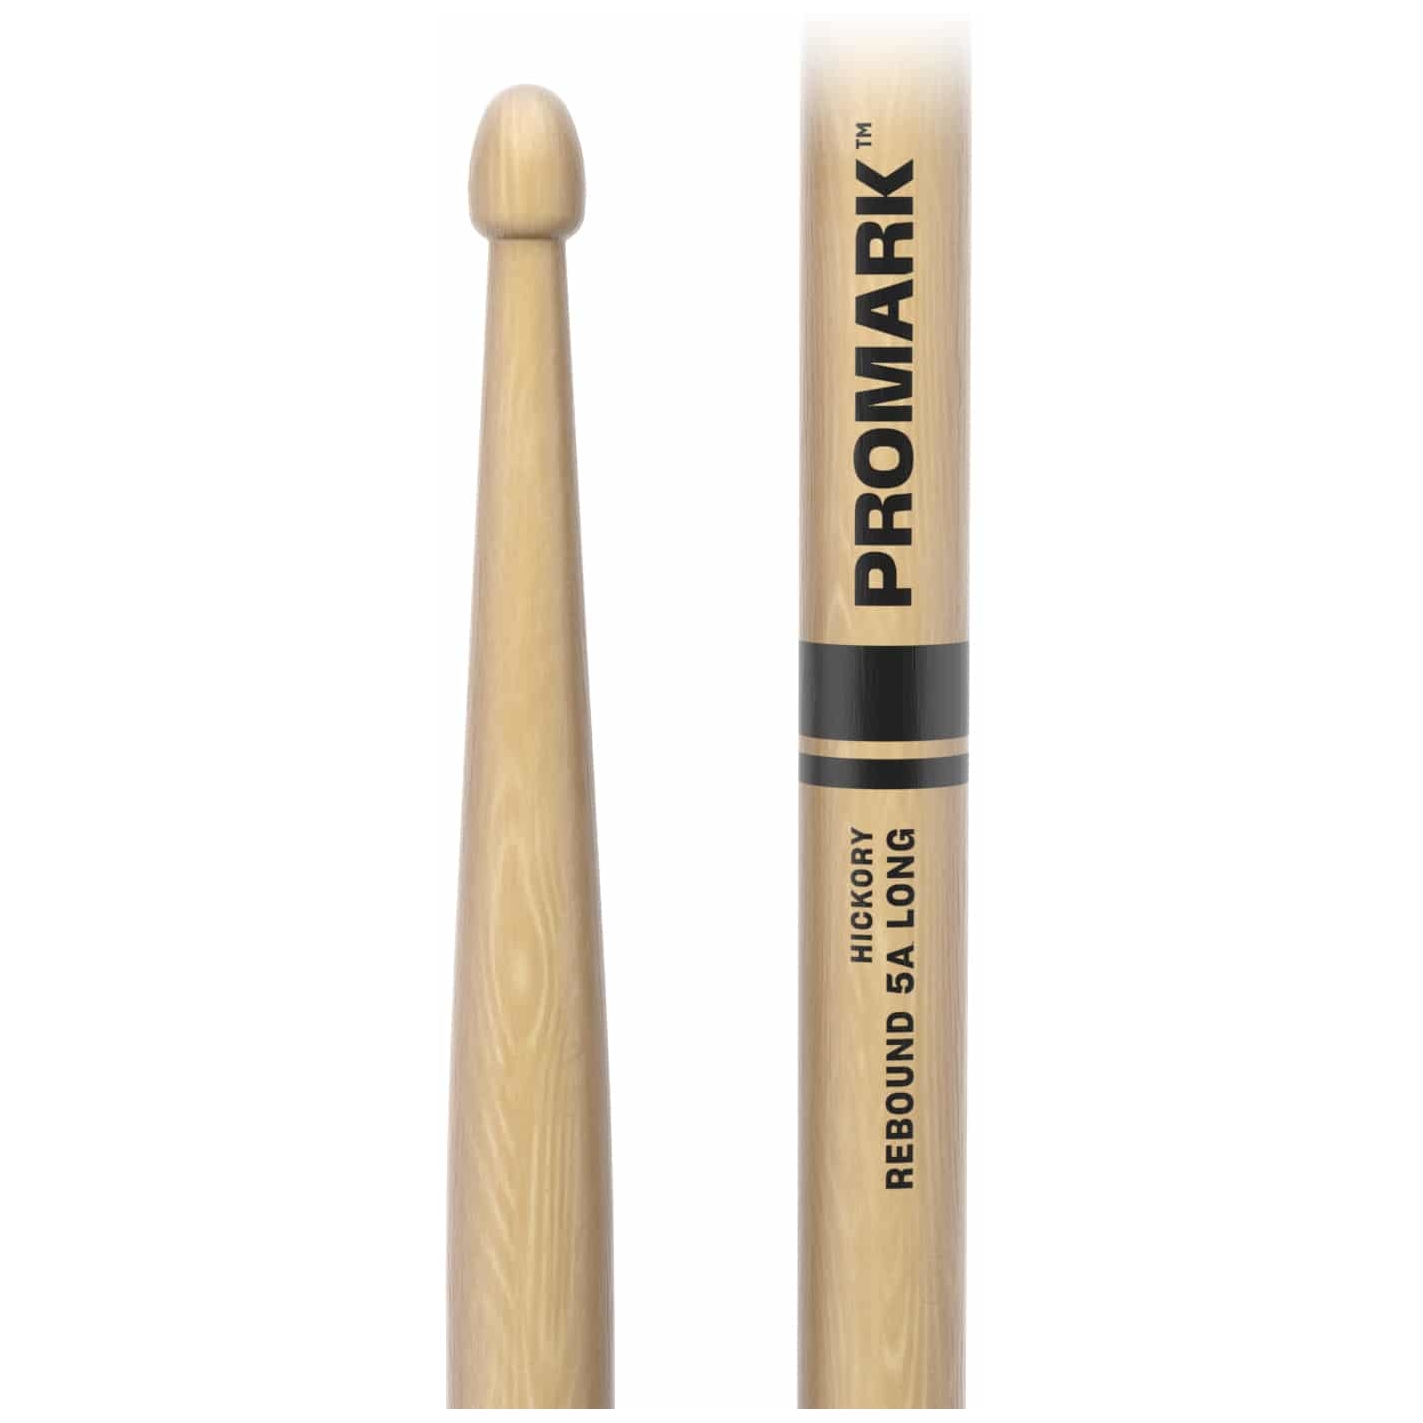 ProMark 5A Rebound balancing 5A - Long - Hickory - Acorn Wood tip shape